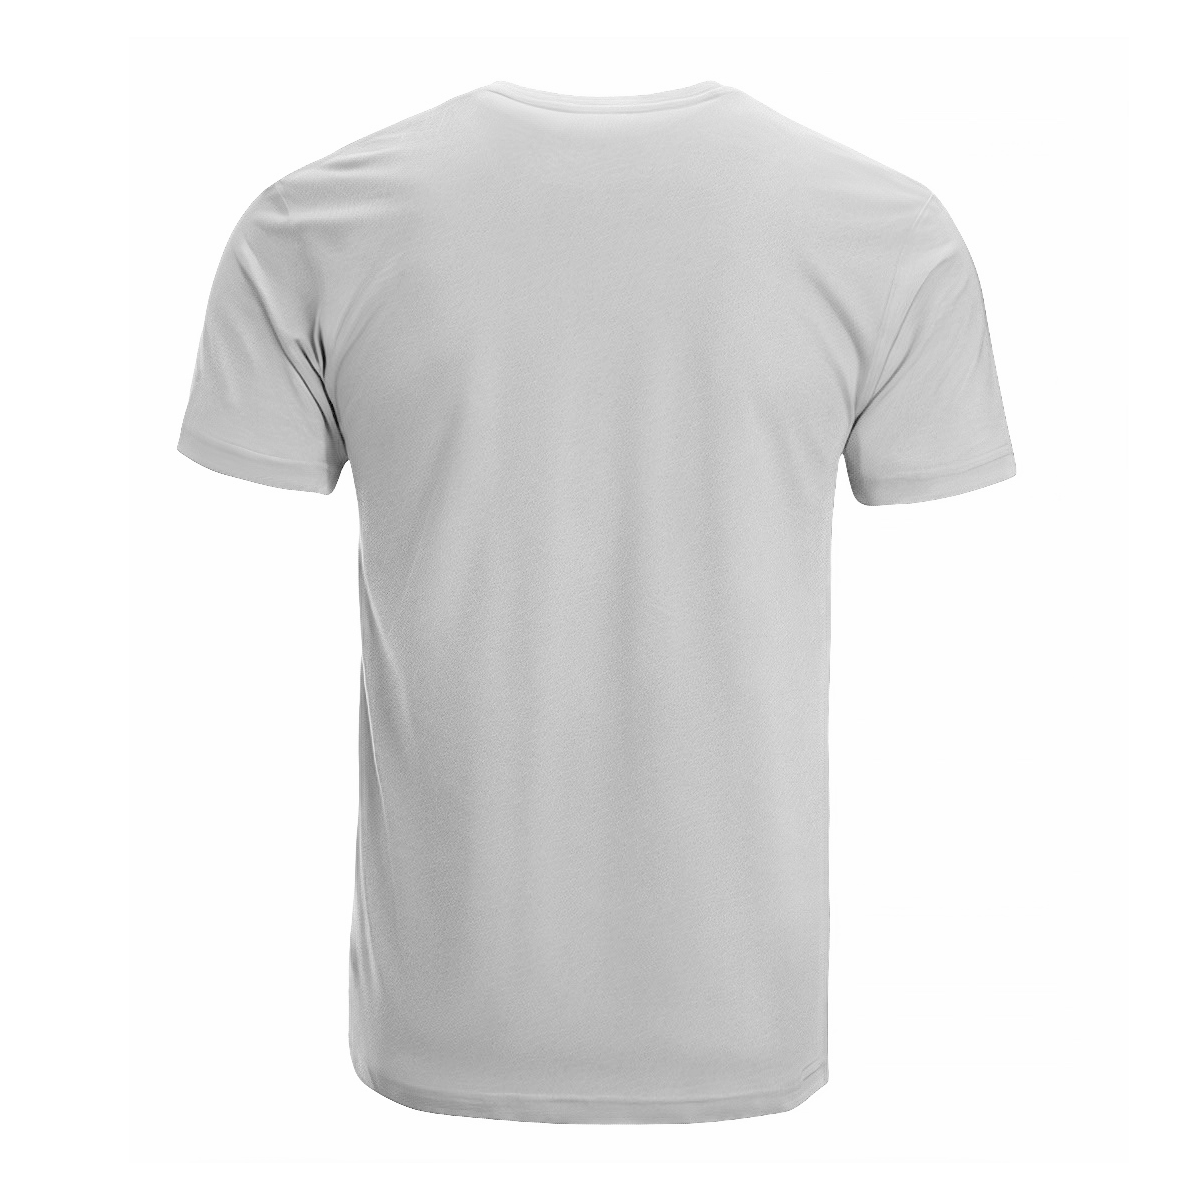 Matheson Tartan Crest T-shirt - I'm not yelling style